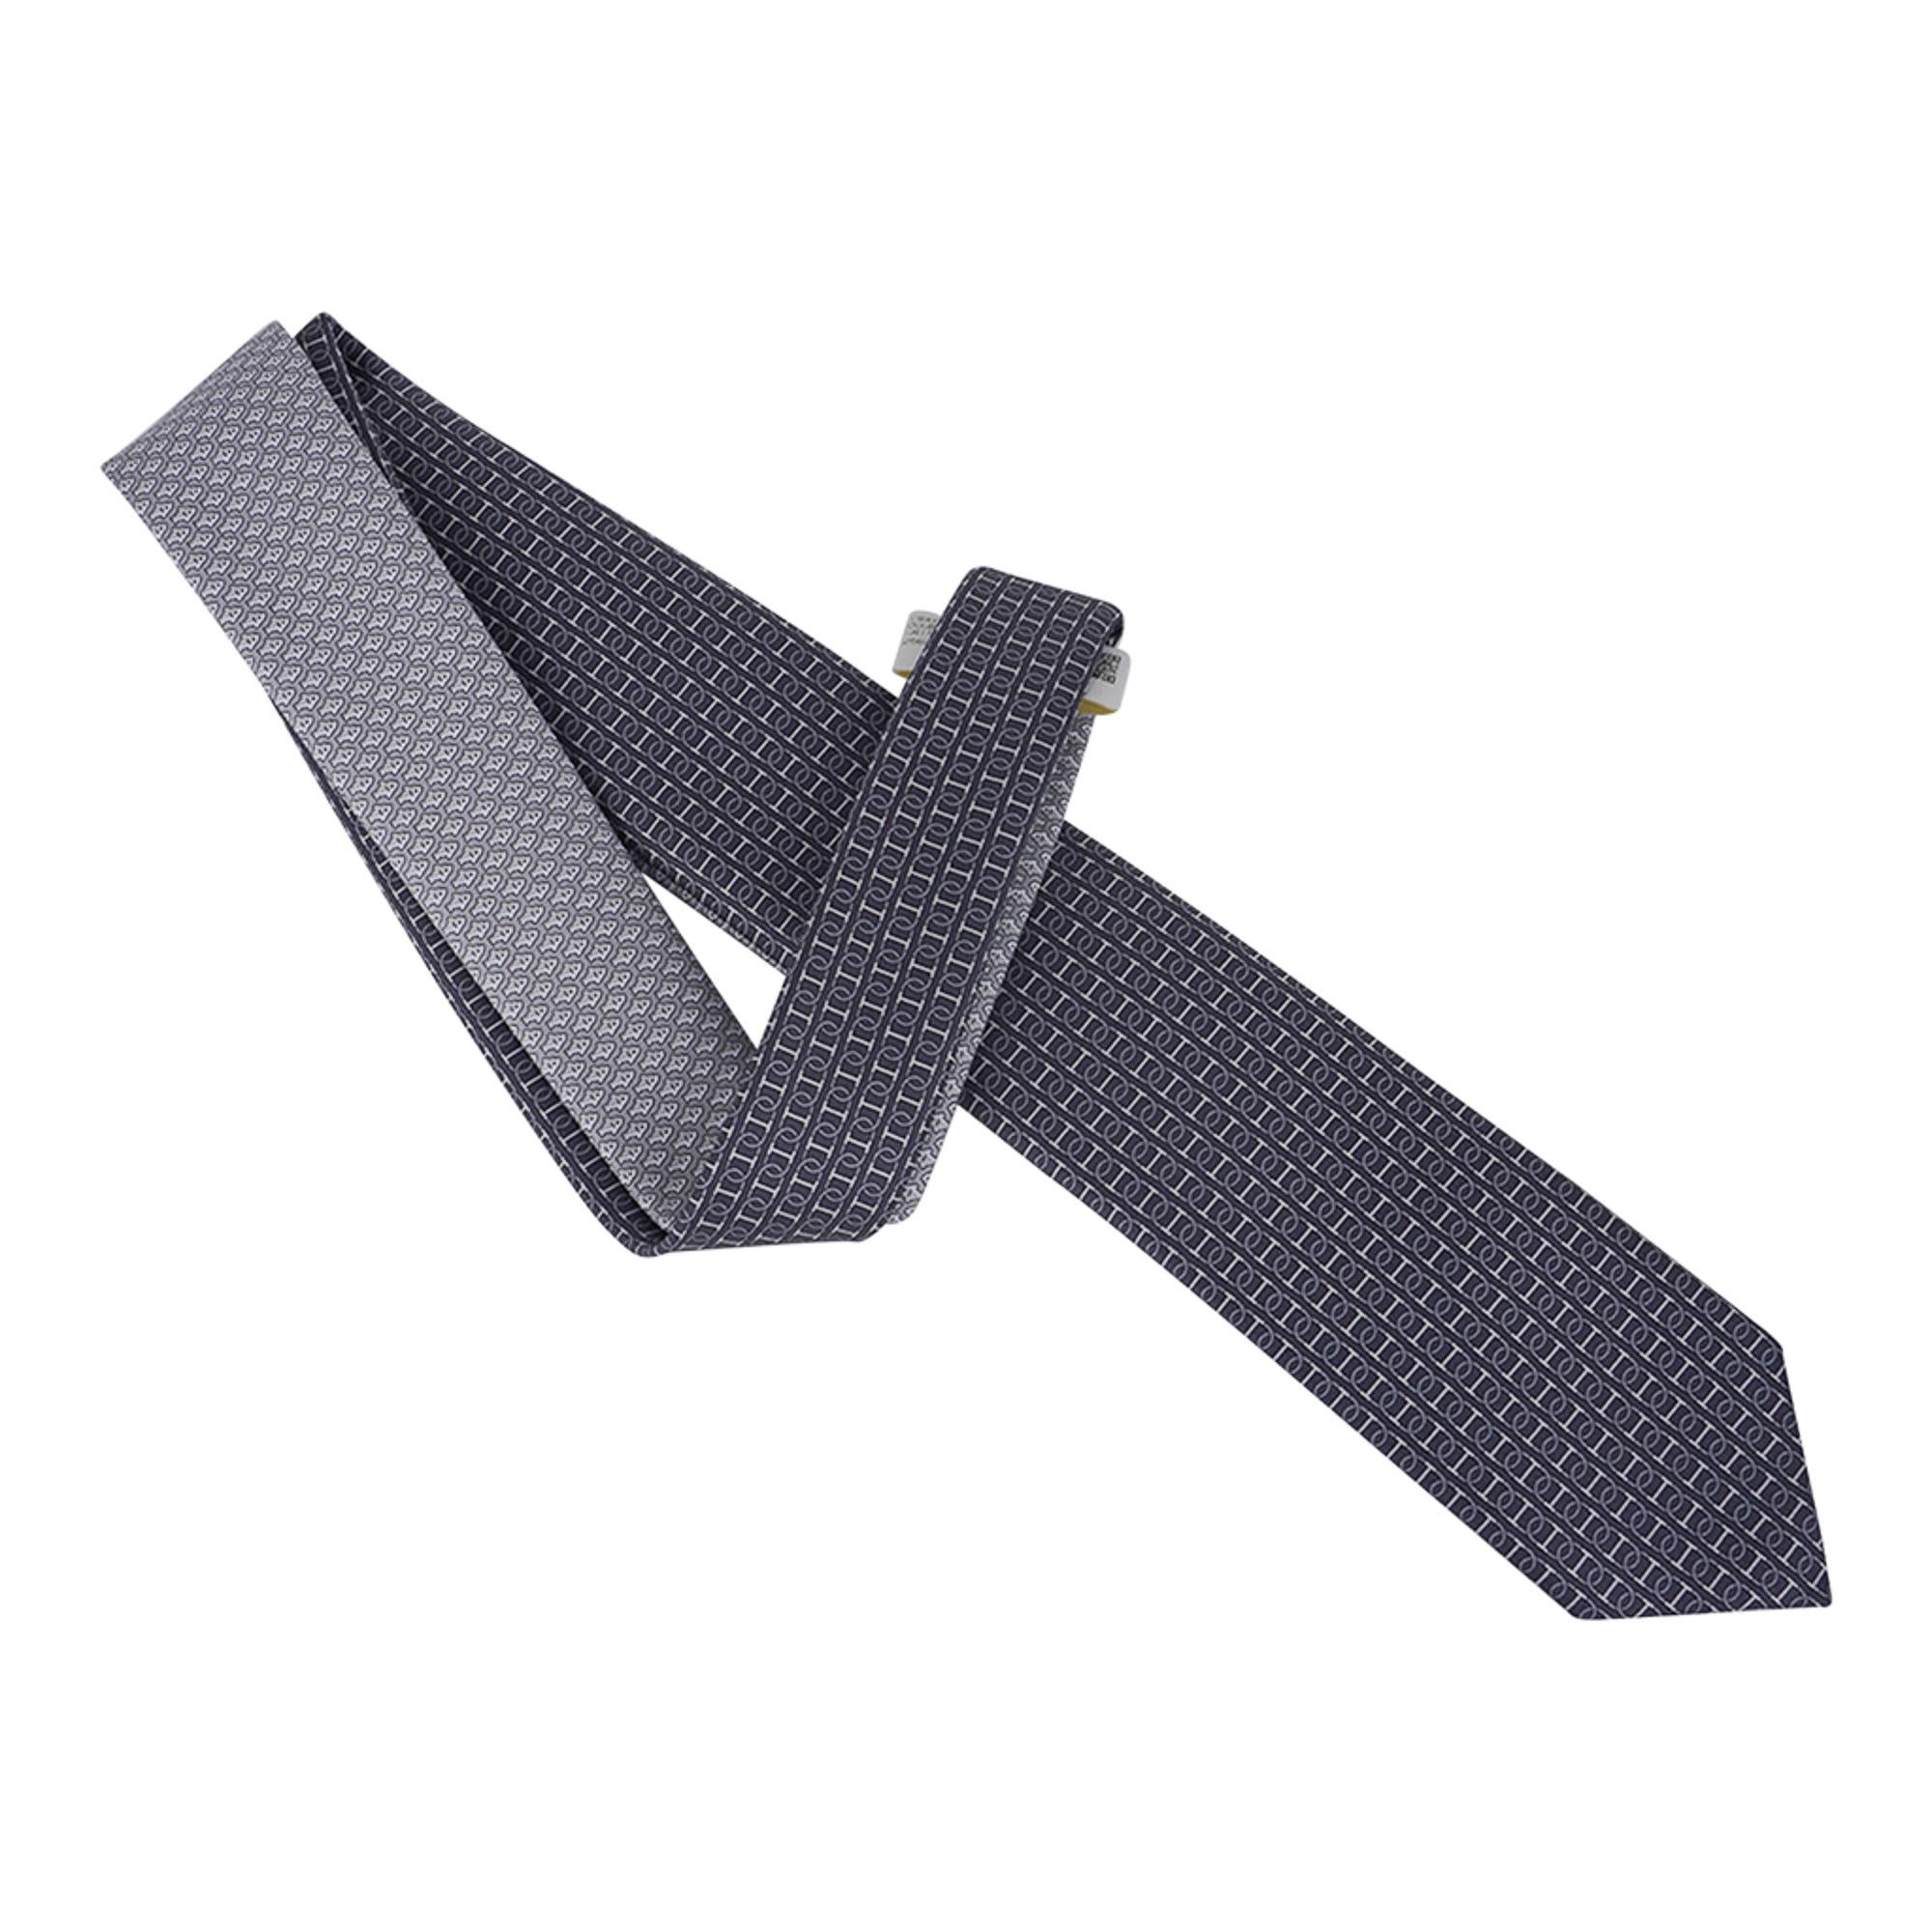 Hermes Tie Double 6 Imprimee Antracite/Gris Twillbi New w/Box For Sale 2